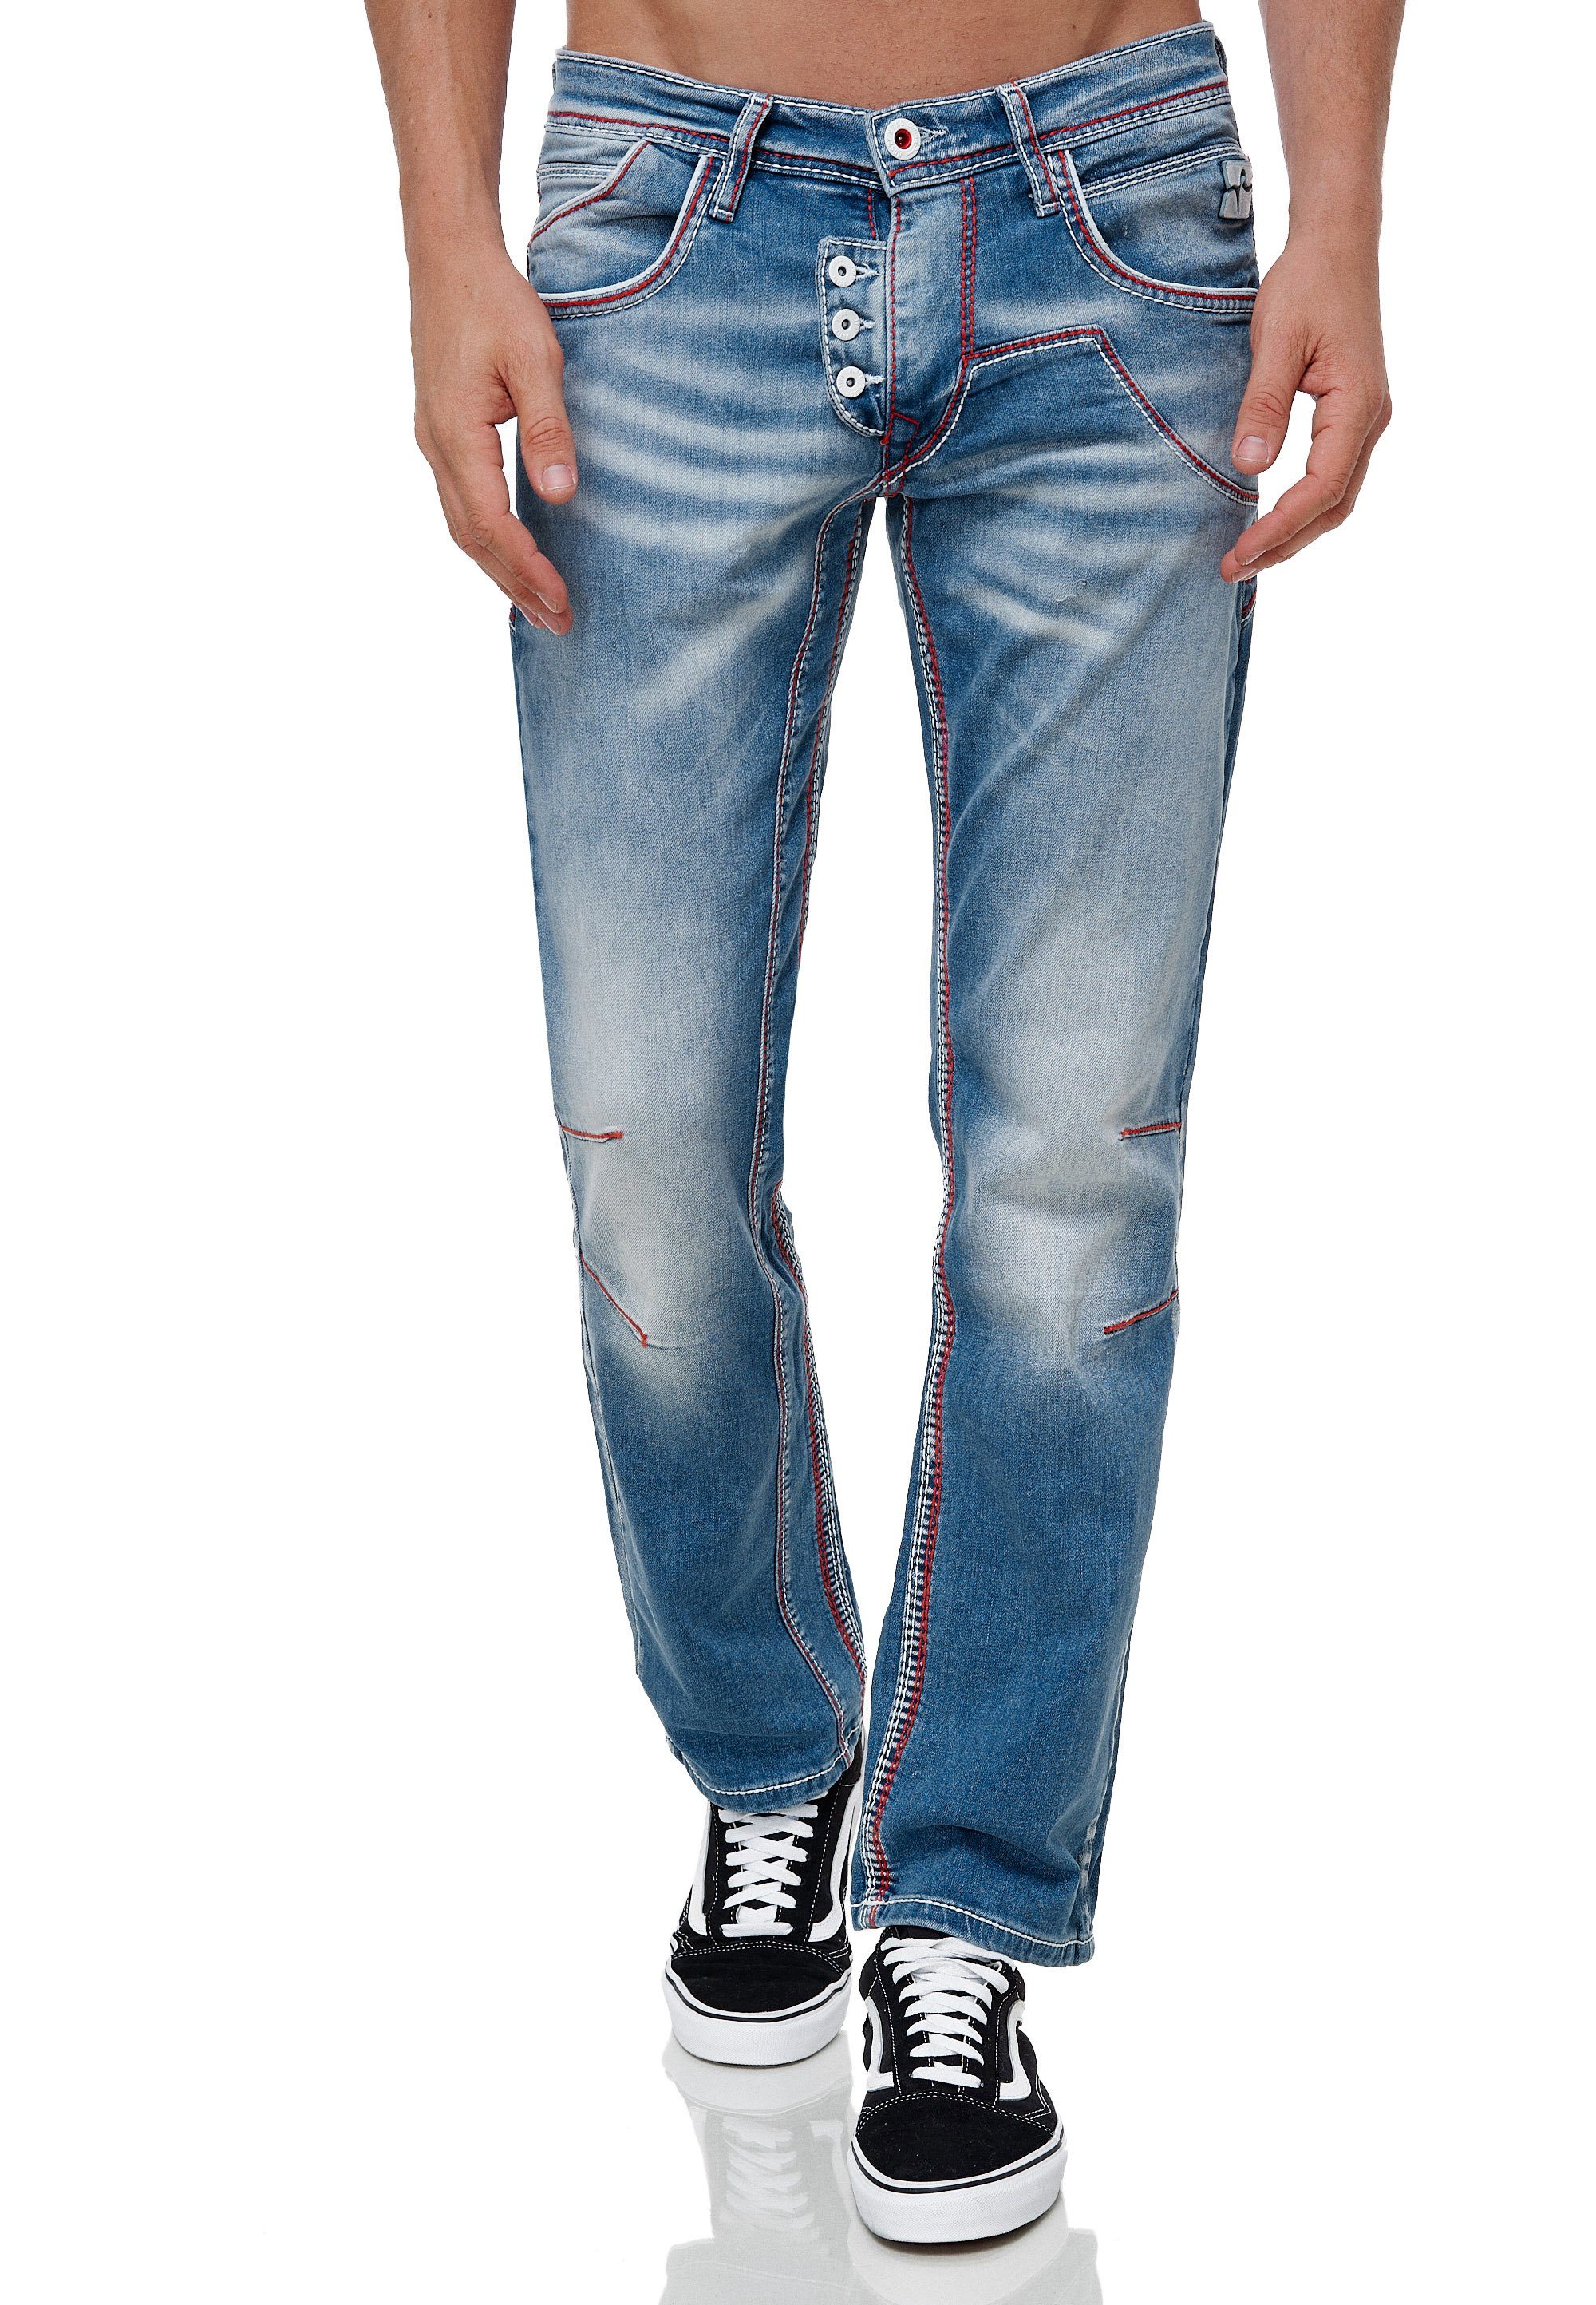 Rusty Neal Straight-Jeans RUBEN 46 mit auffälligen Ziernähten | Straight-Fit Jeans